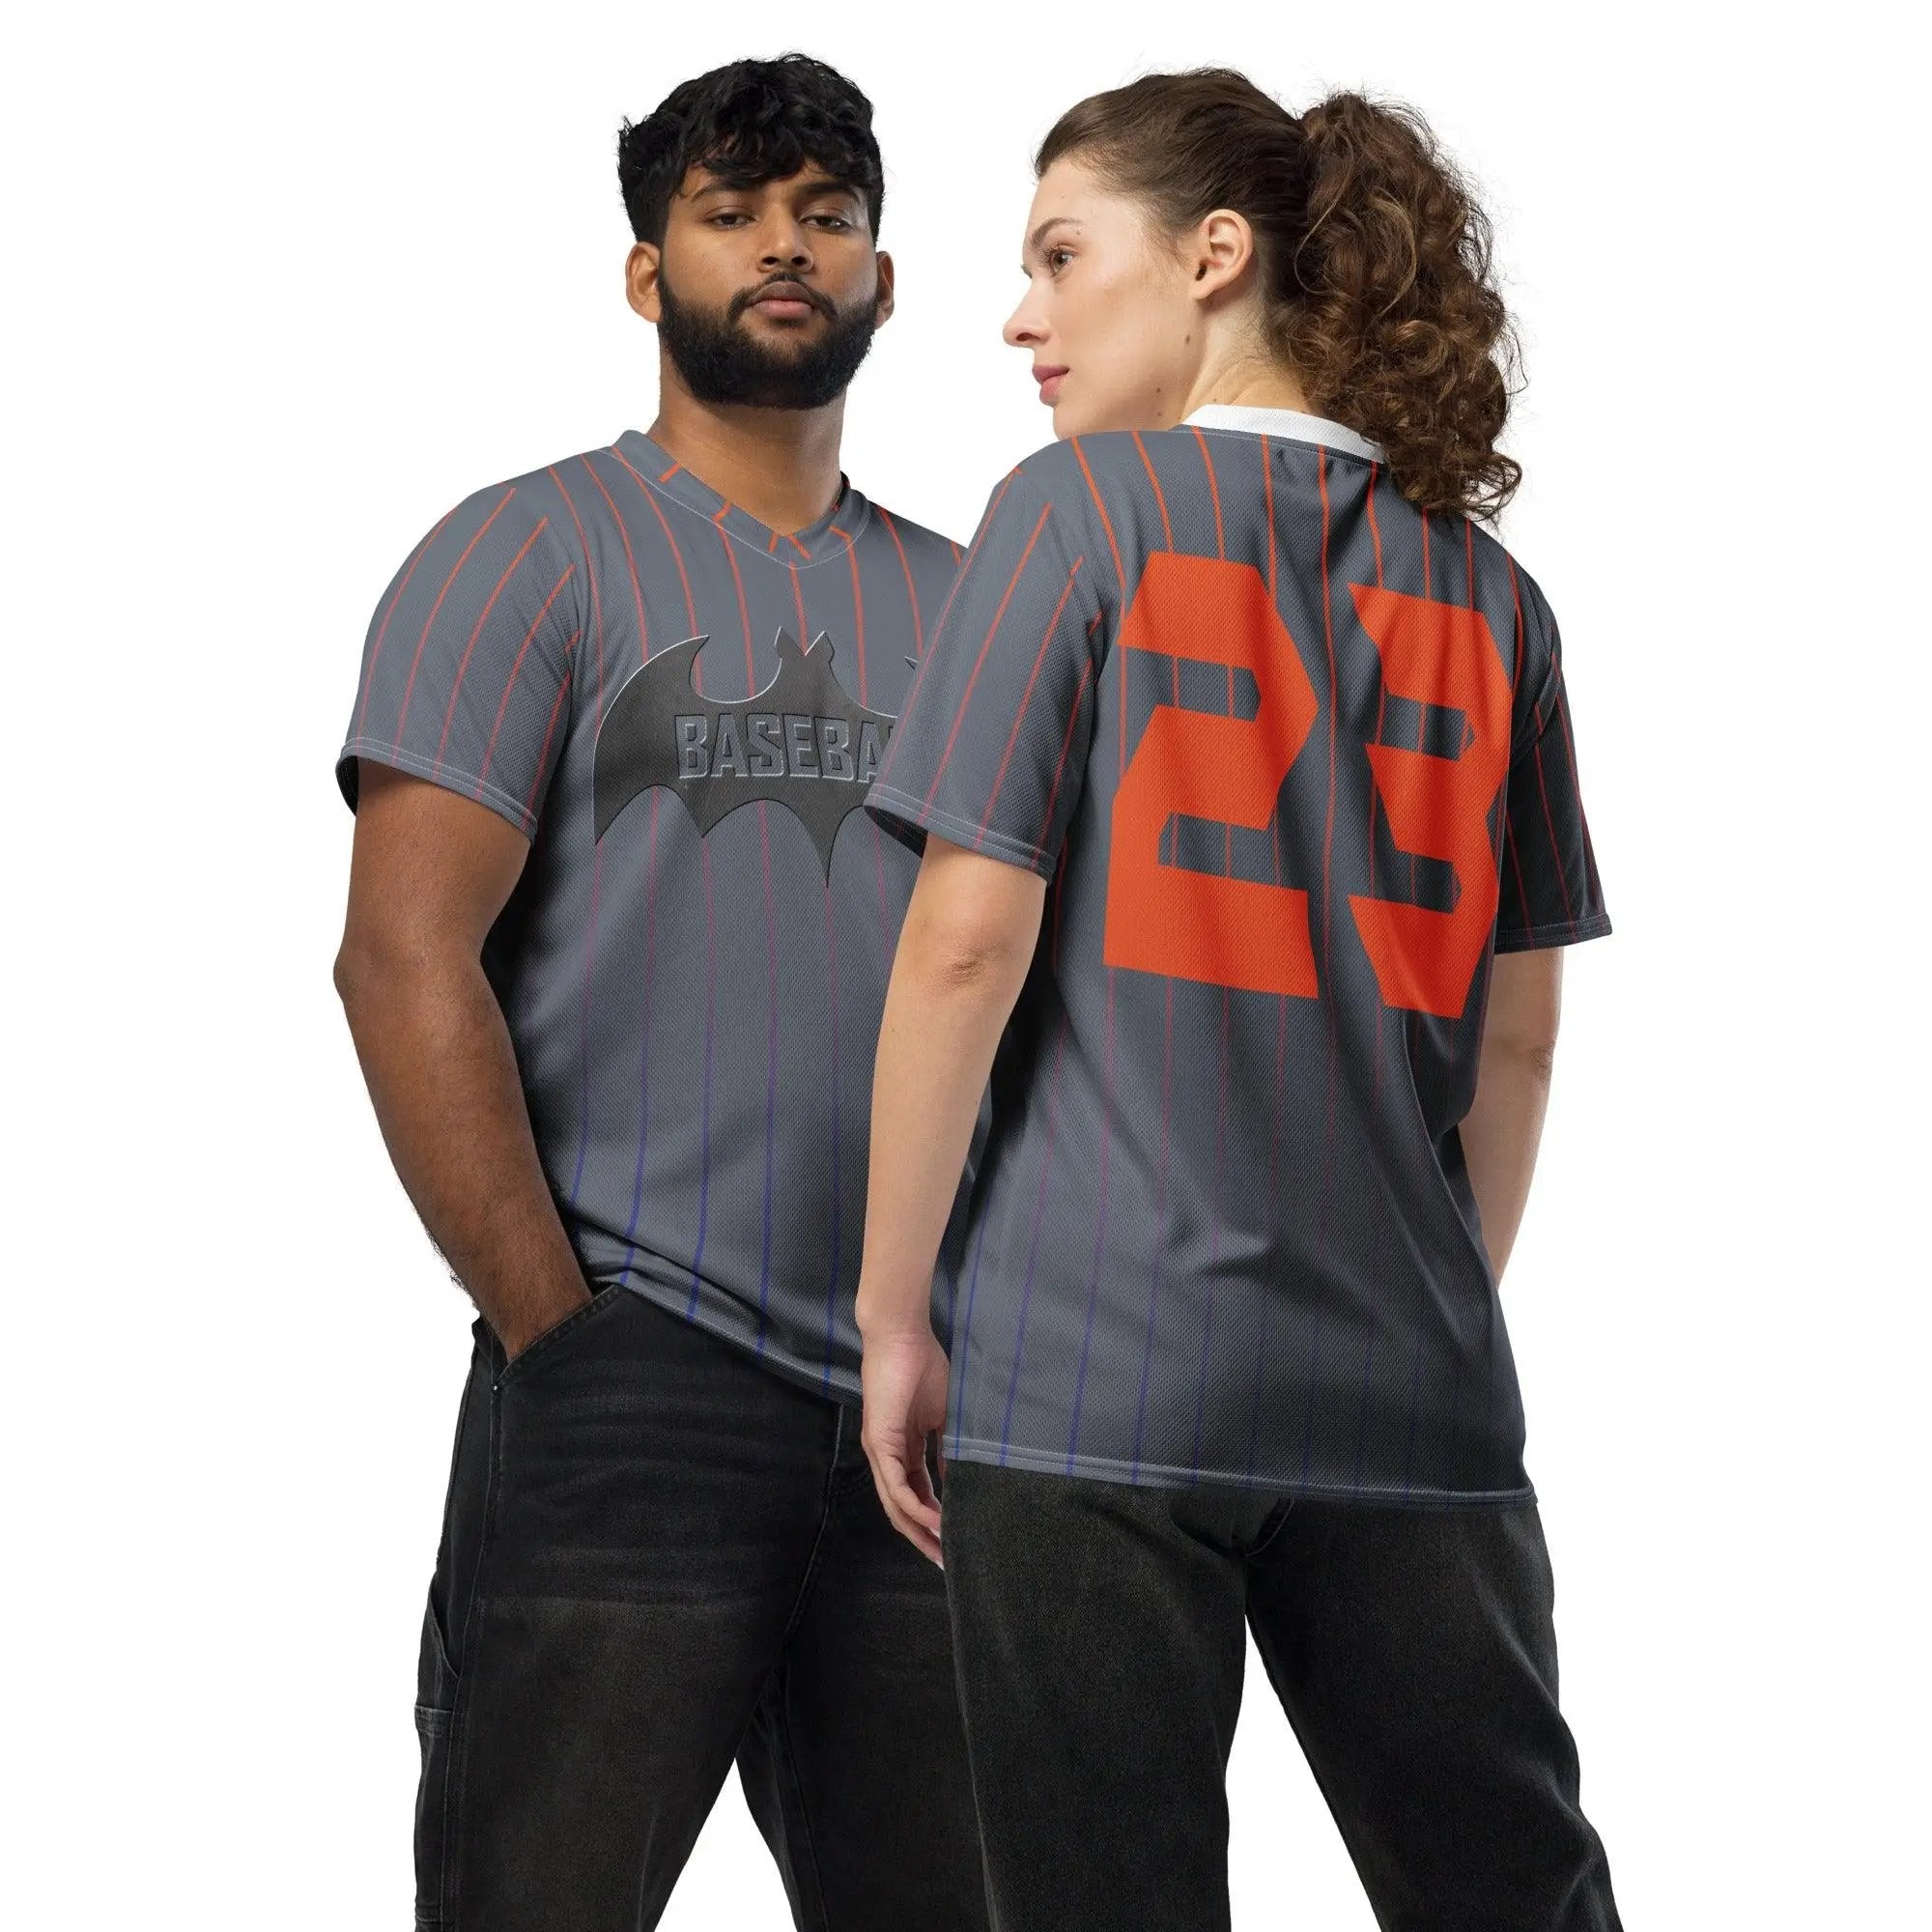 Baseball Bat Recycled unisex sports jersey